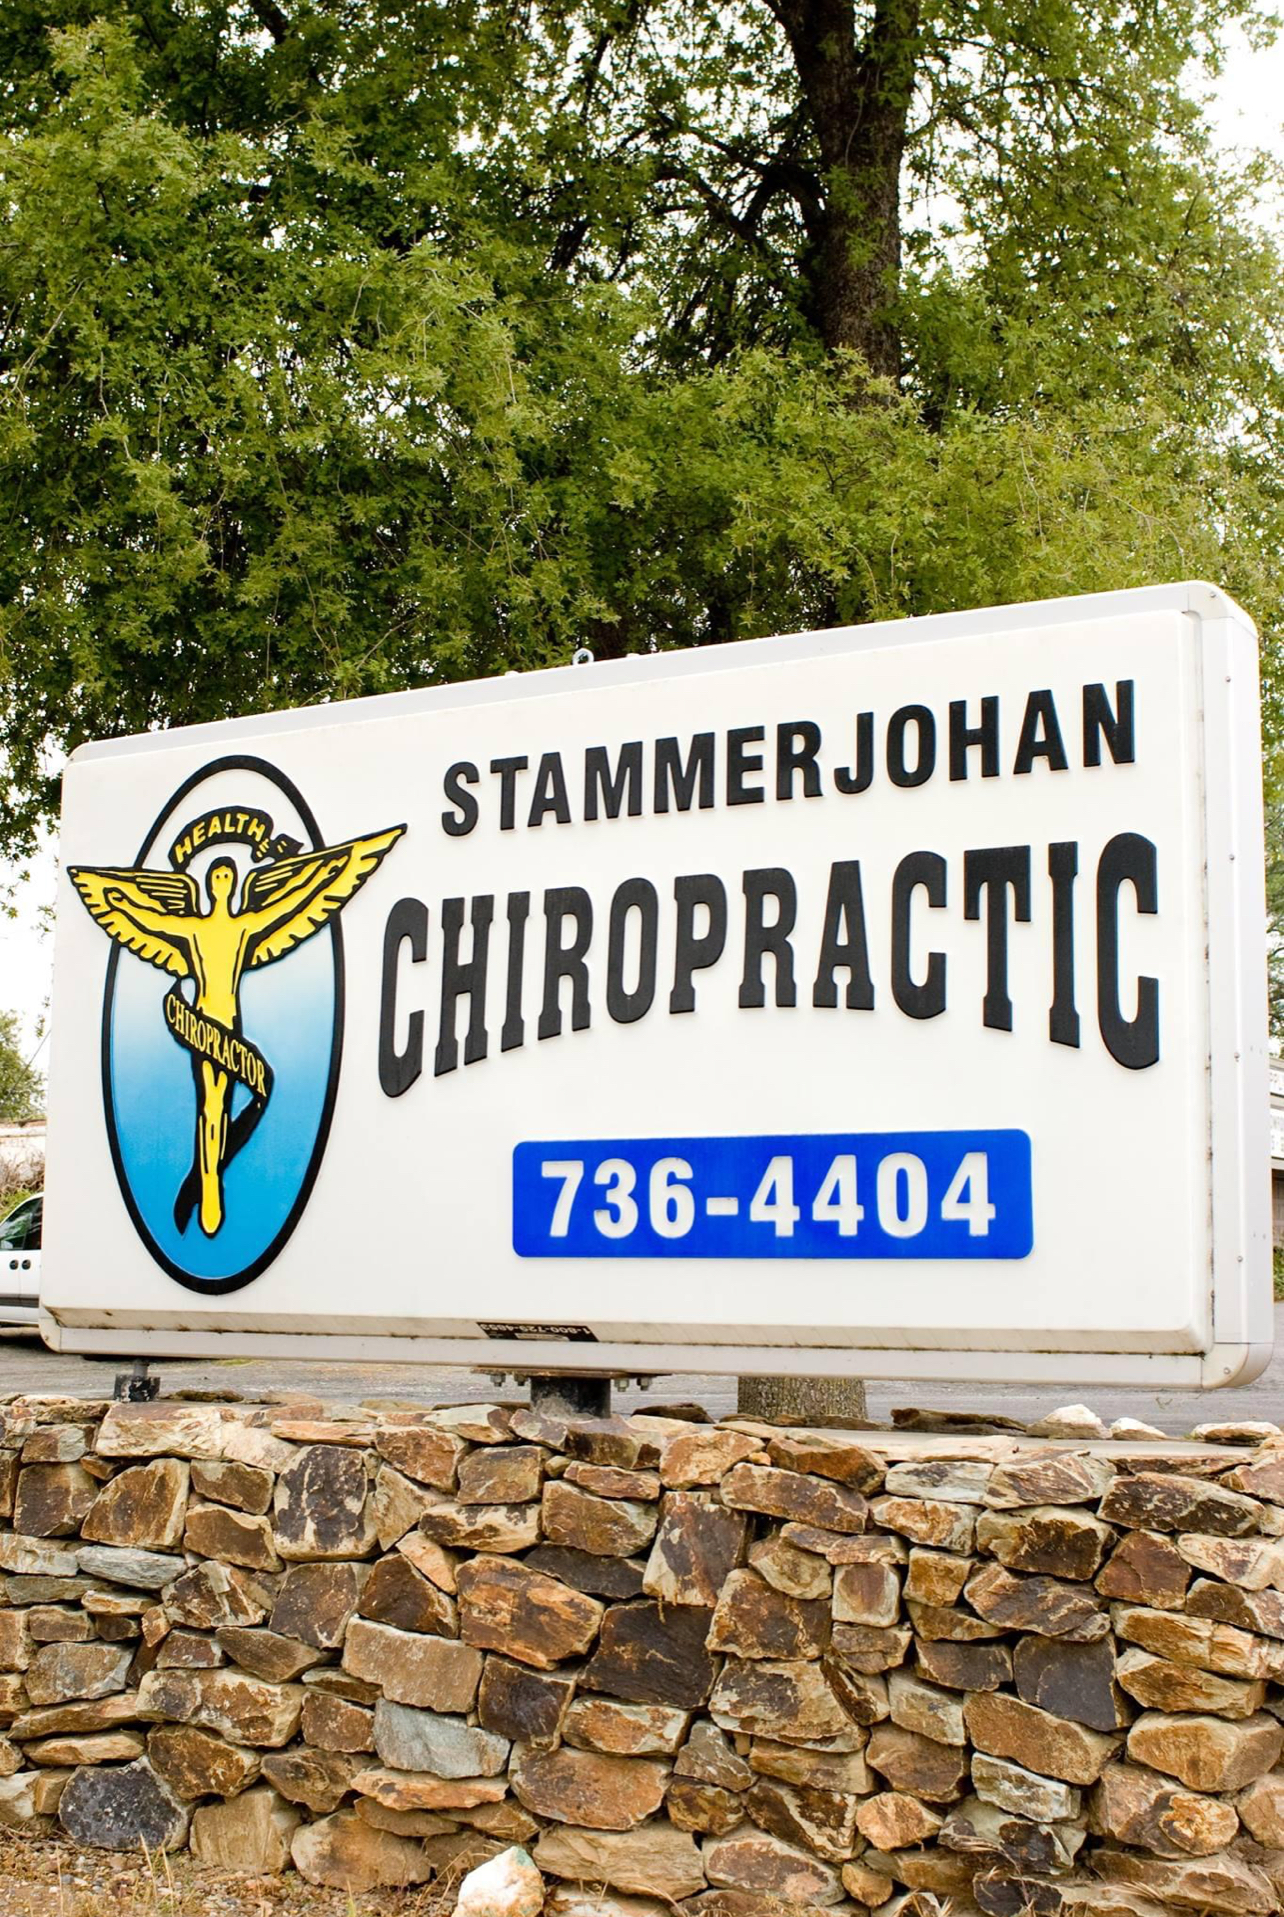 Stammerjohan Chiropractic 349 N Main St, Angels Camp California 95222